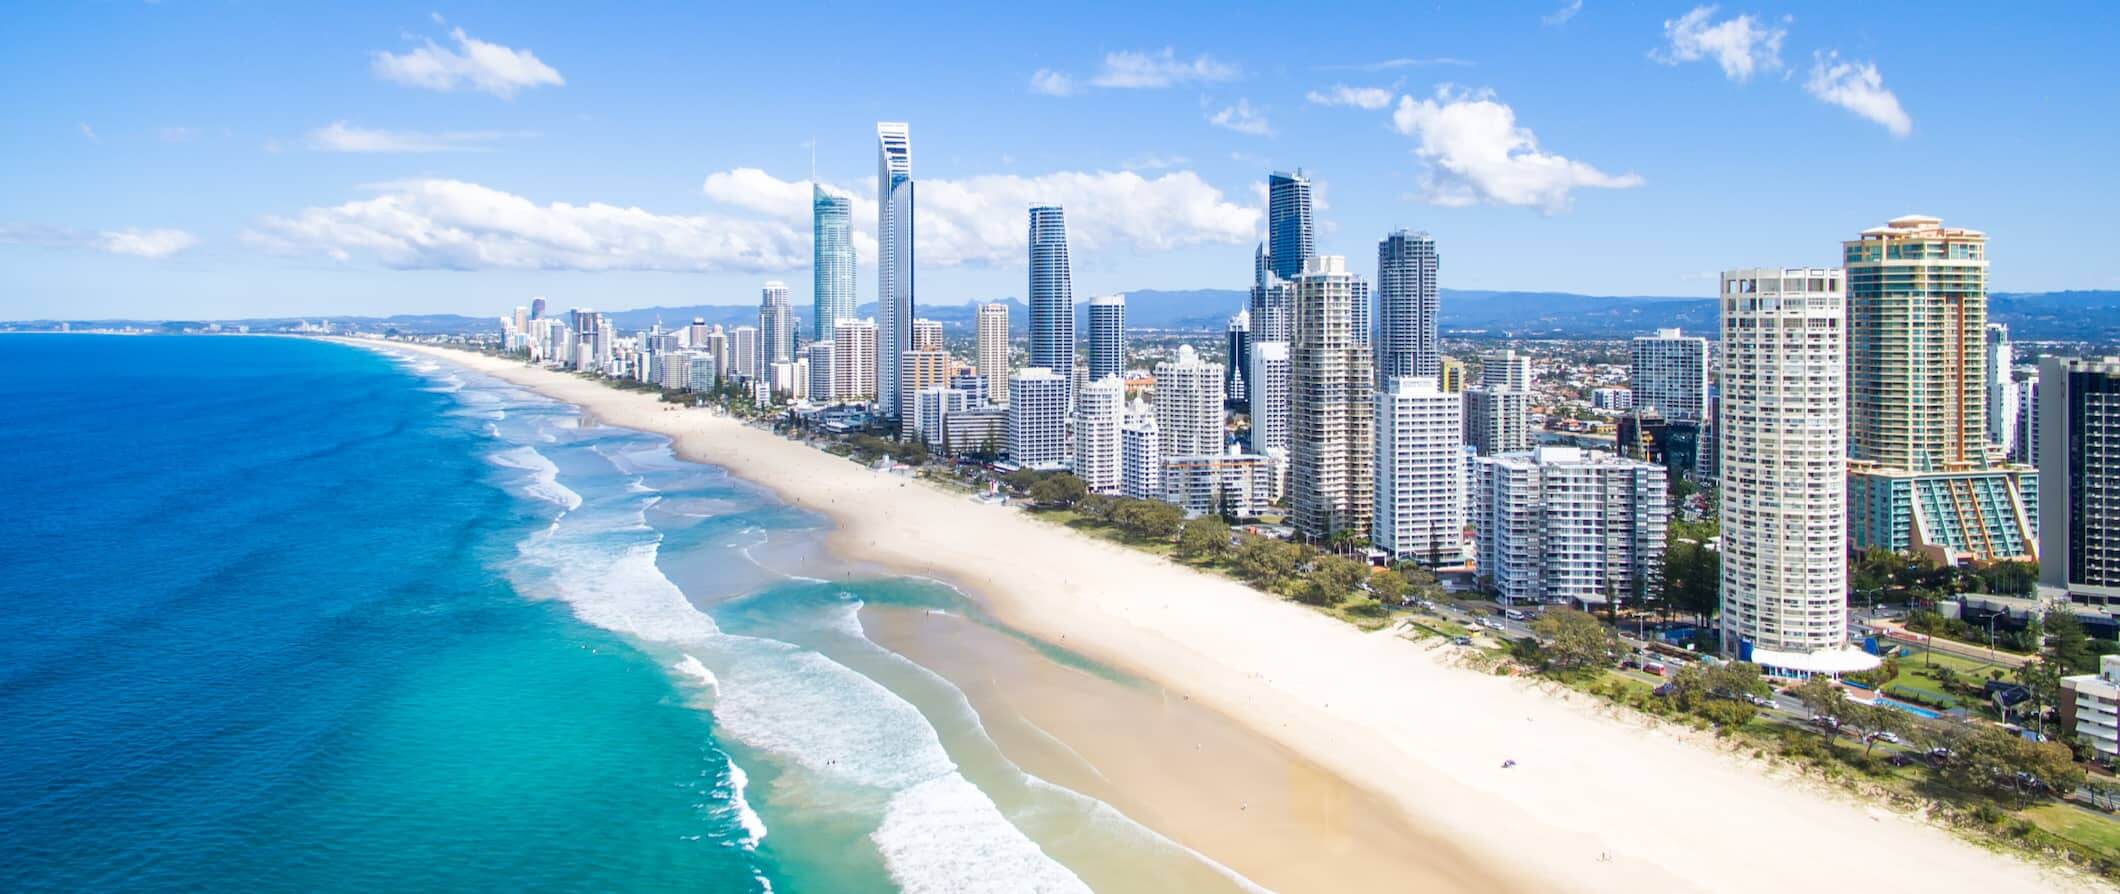 Insider Tips To The Gold Coast Theme Parks - Australian Traveller